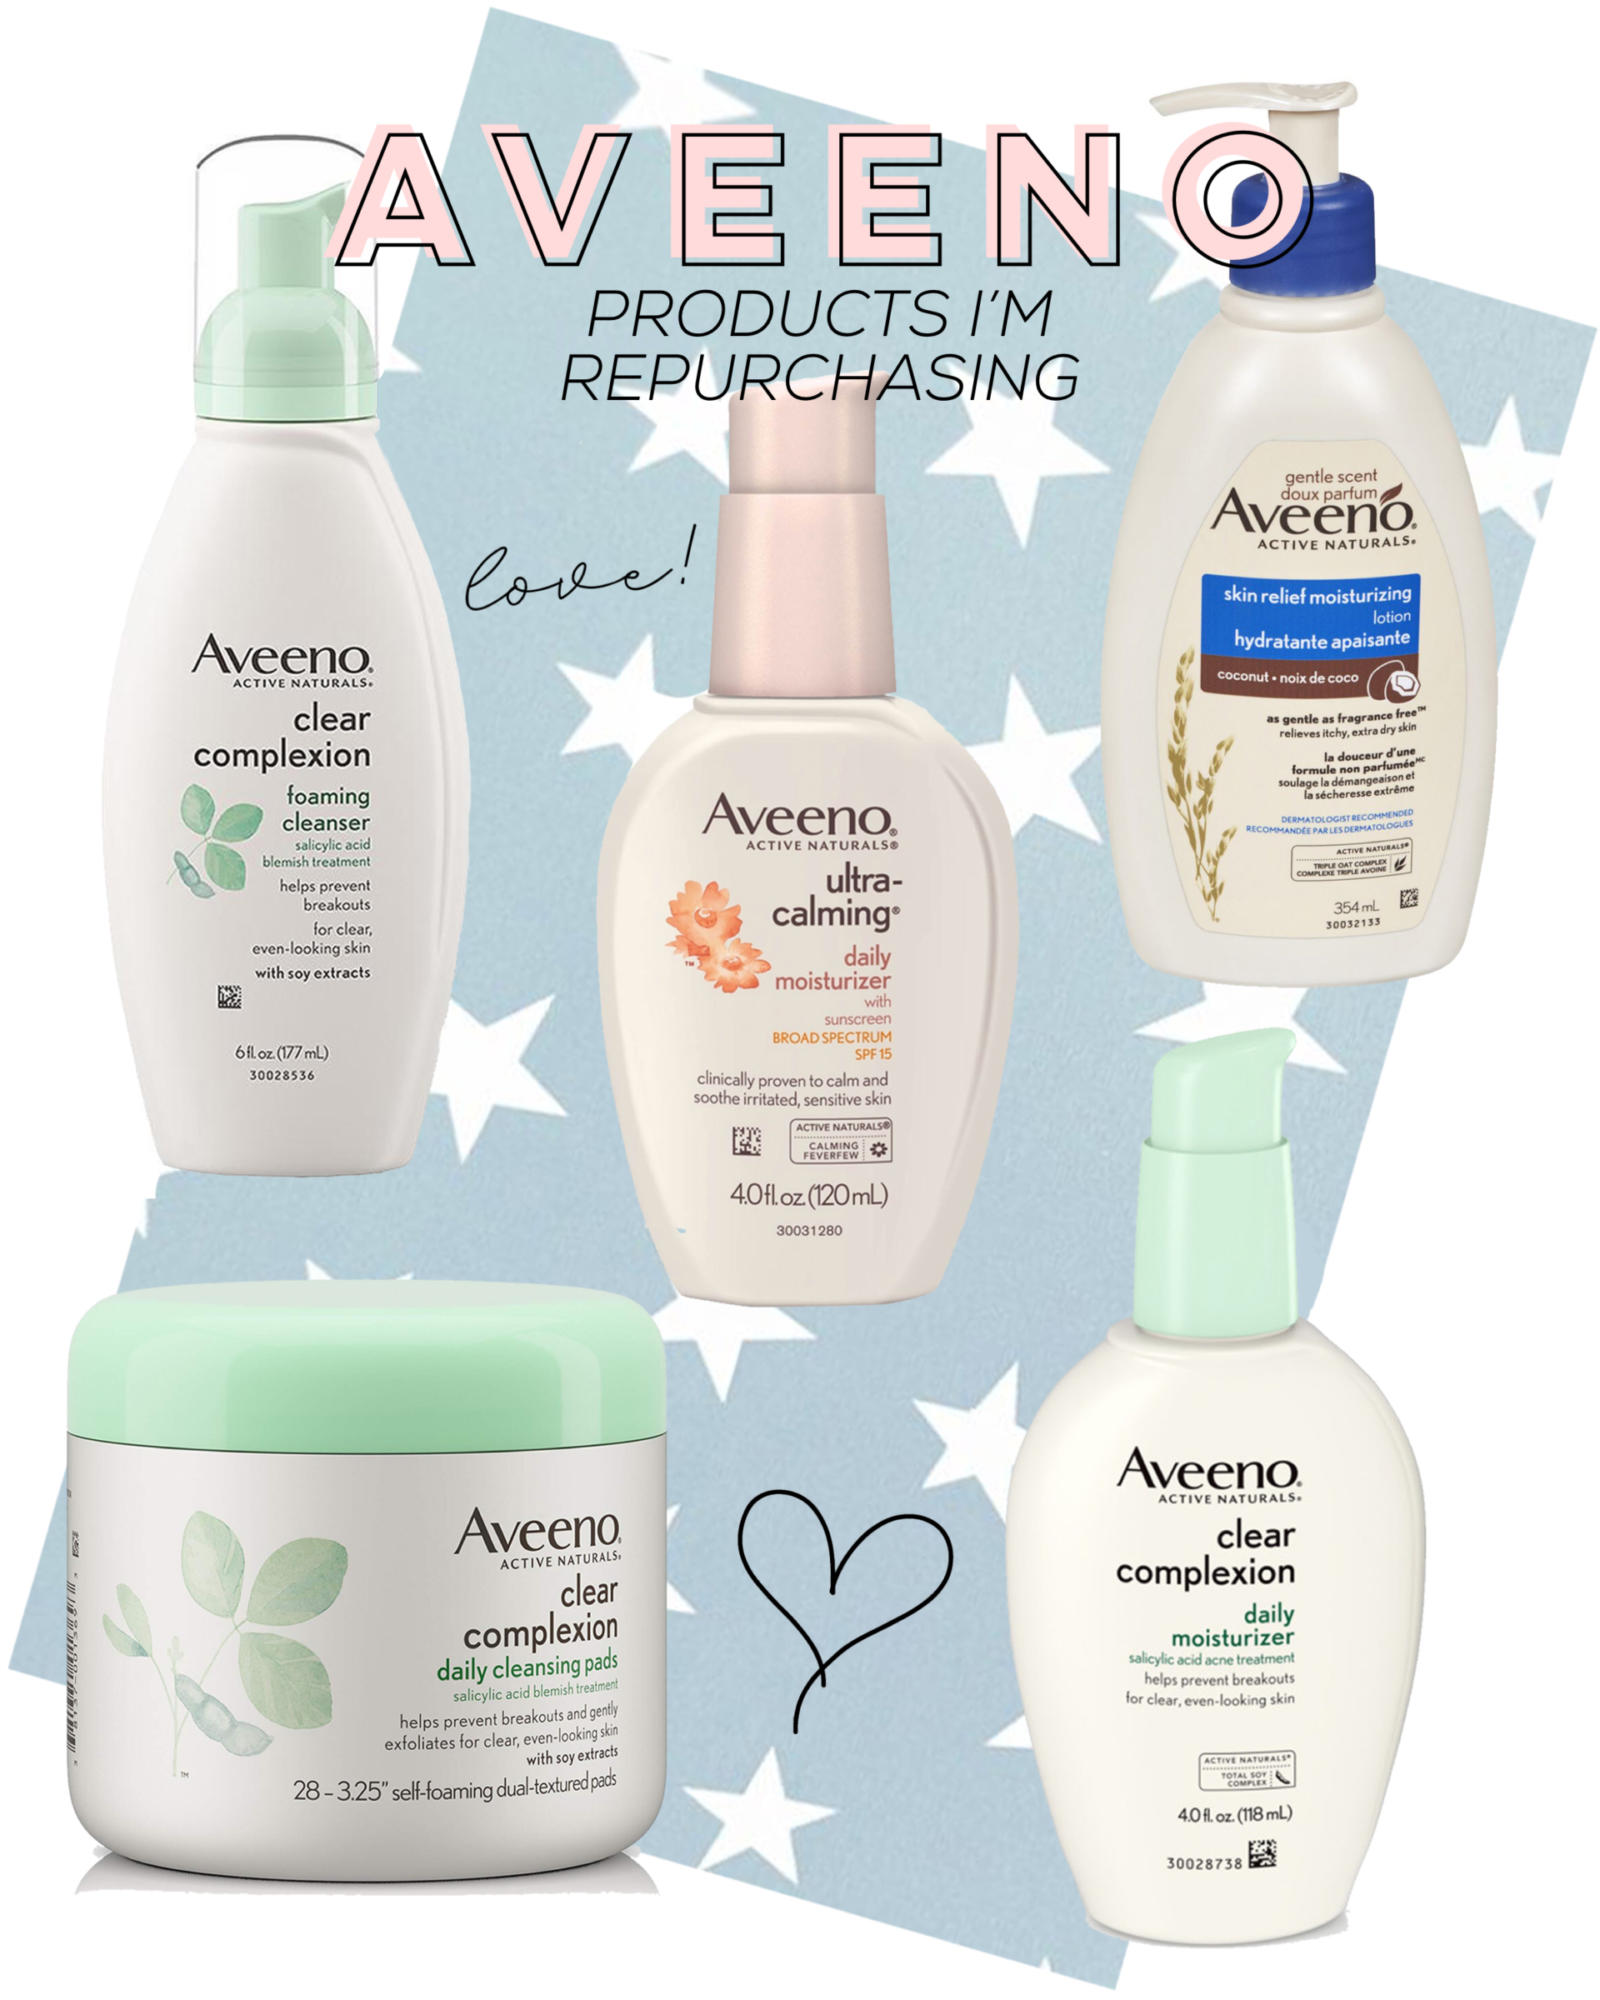 Aveeno Products I’m Repurchasing